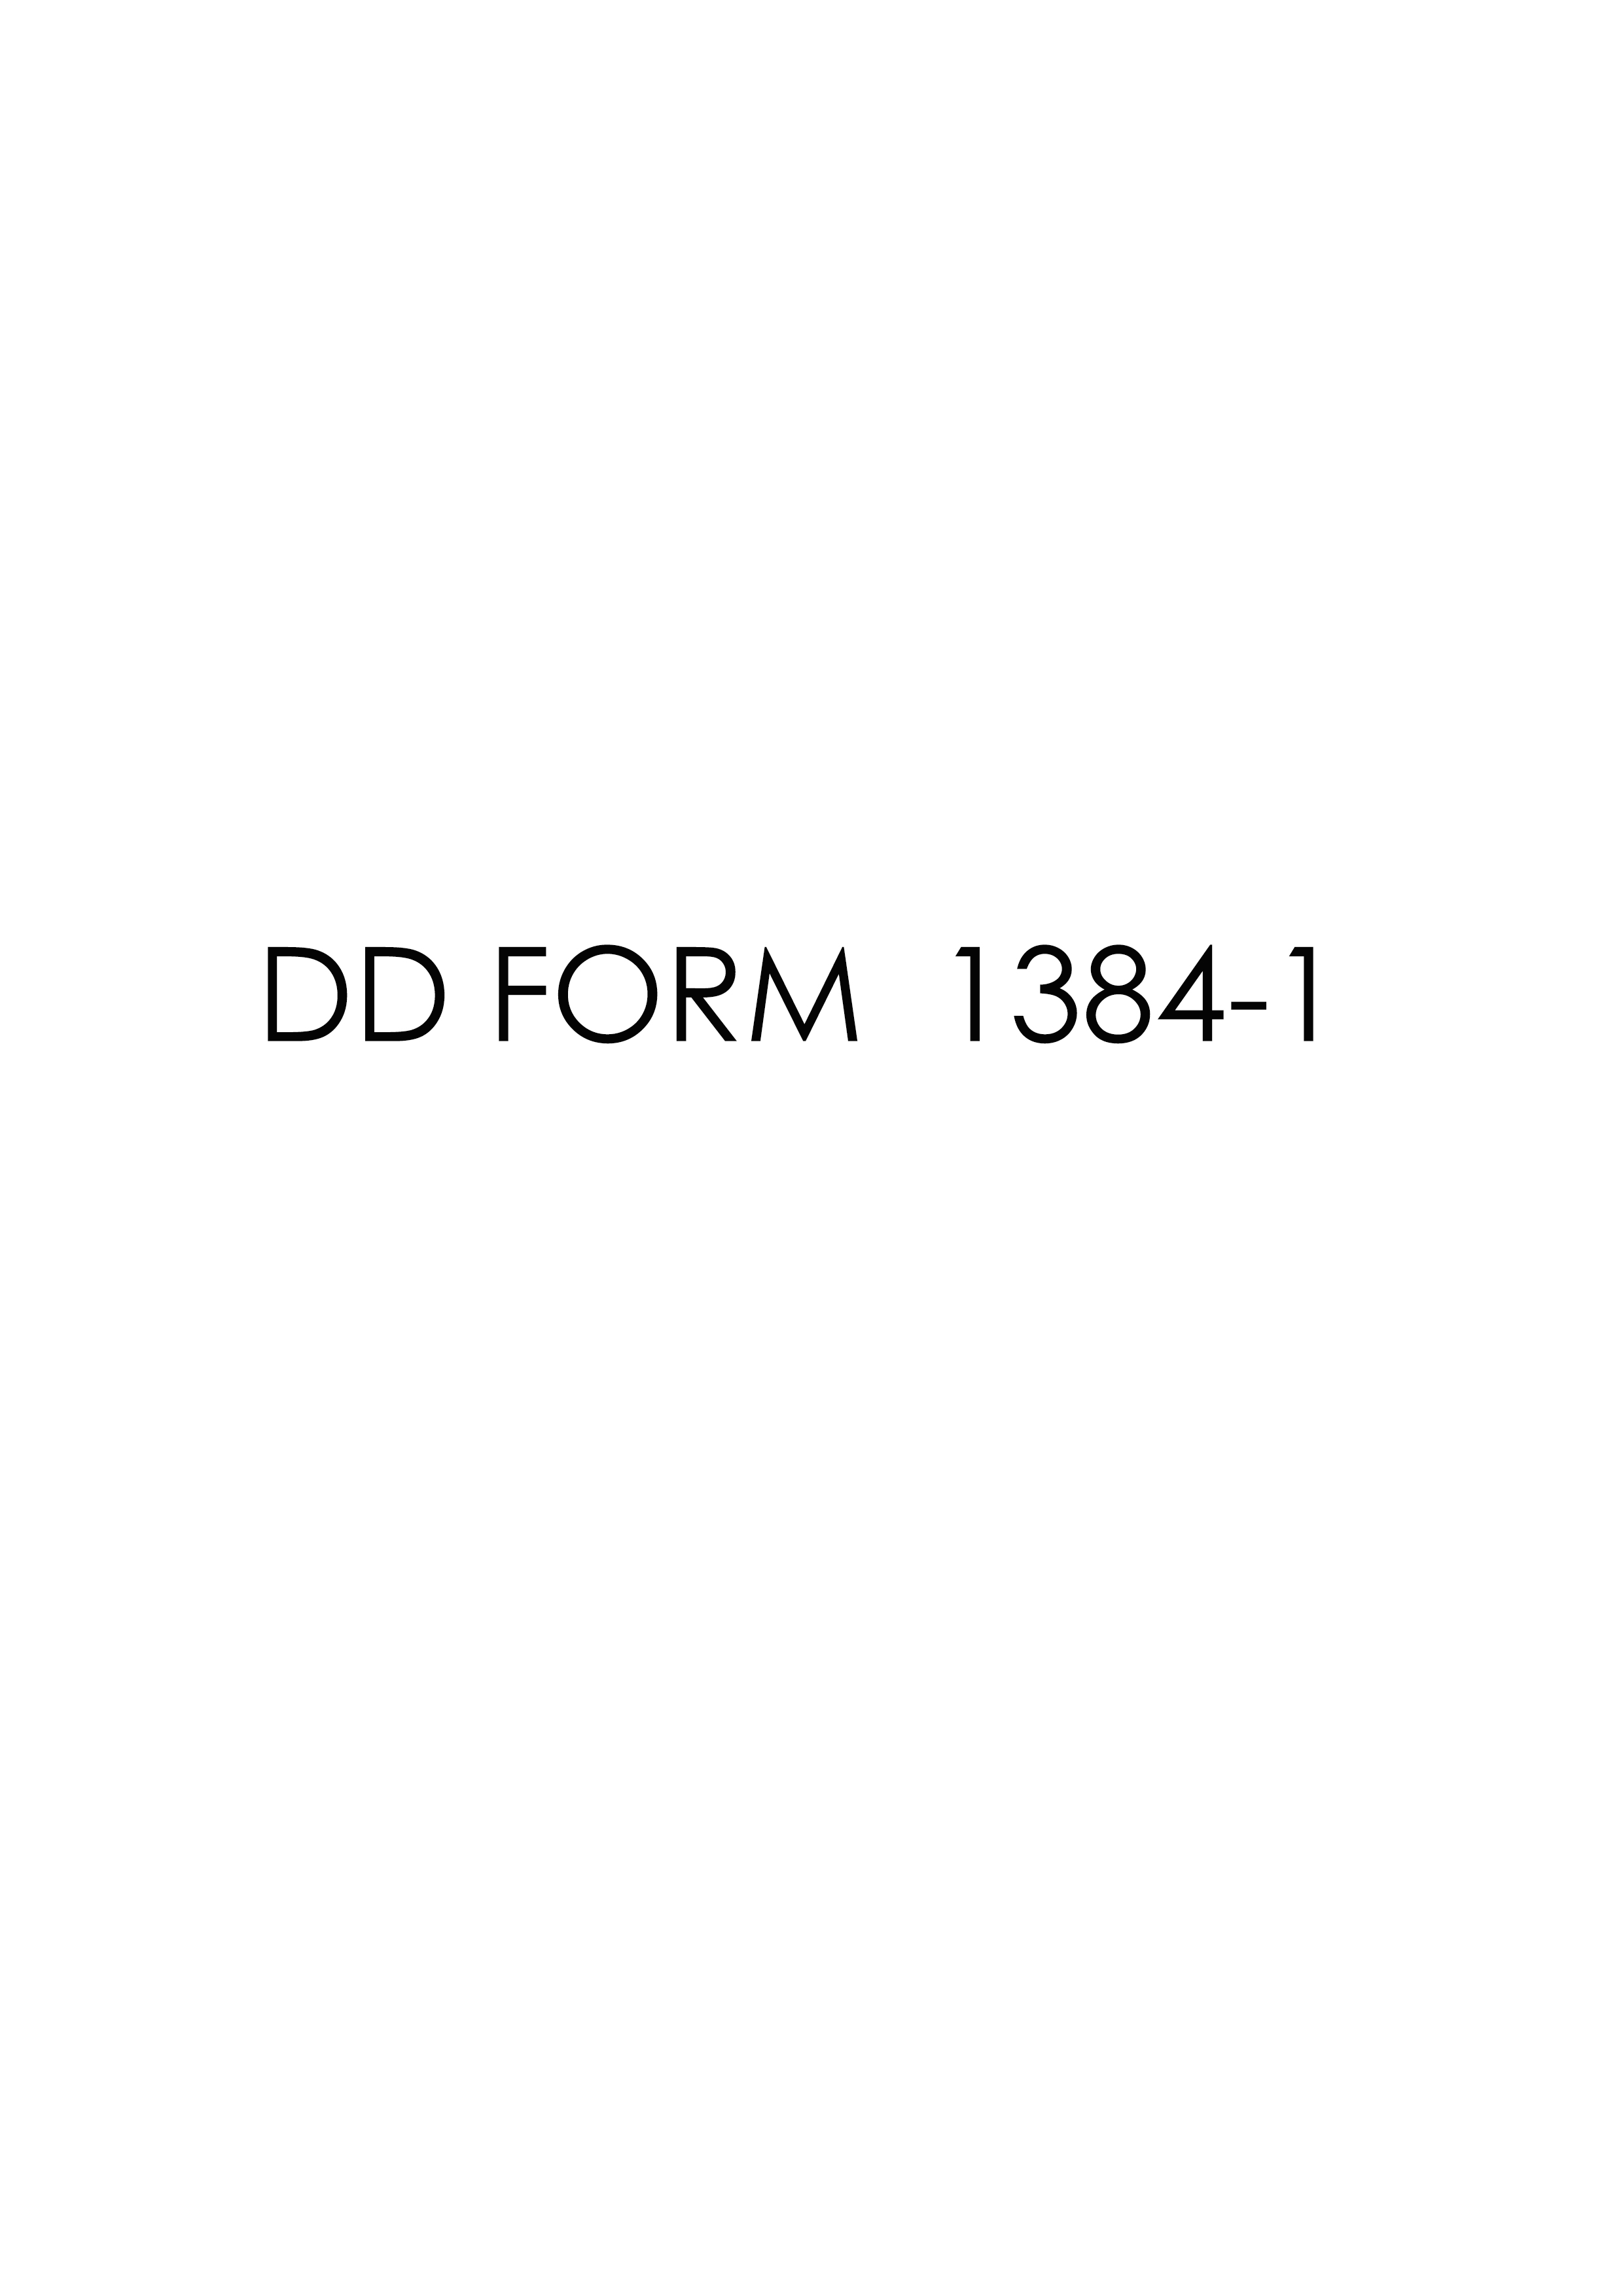 Download dd form 1384-1